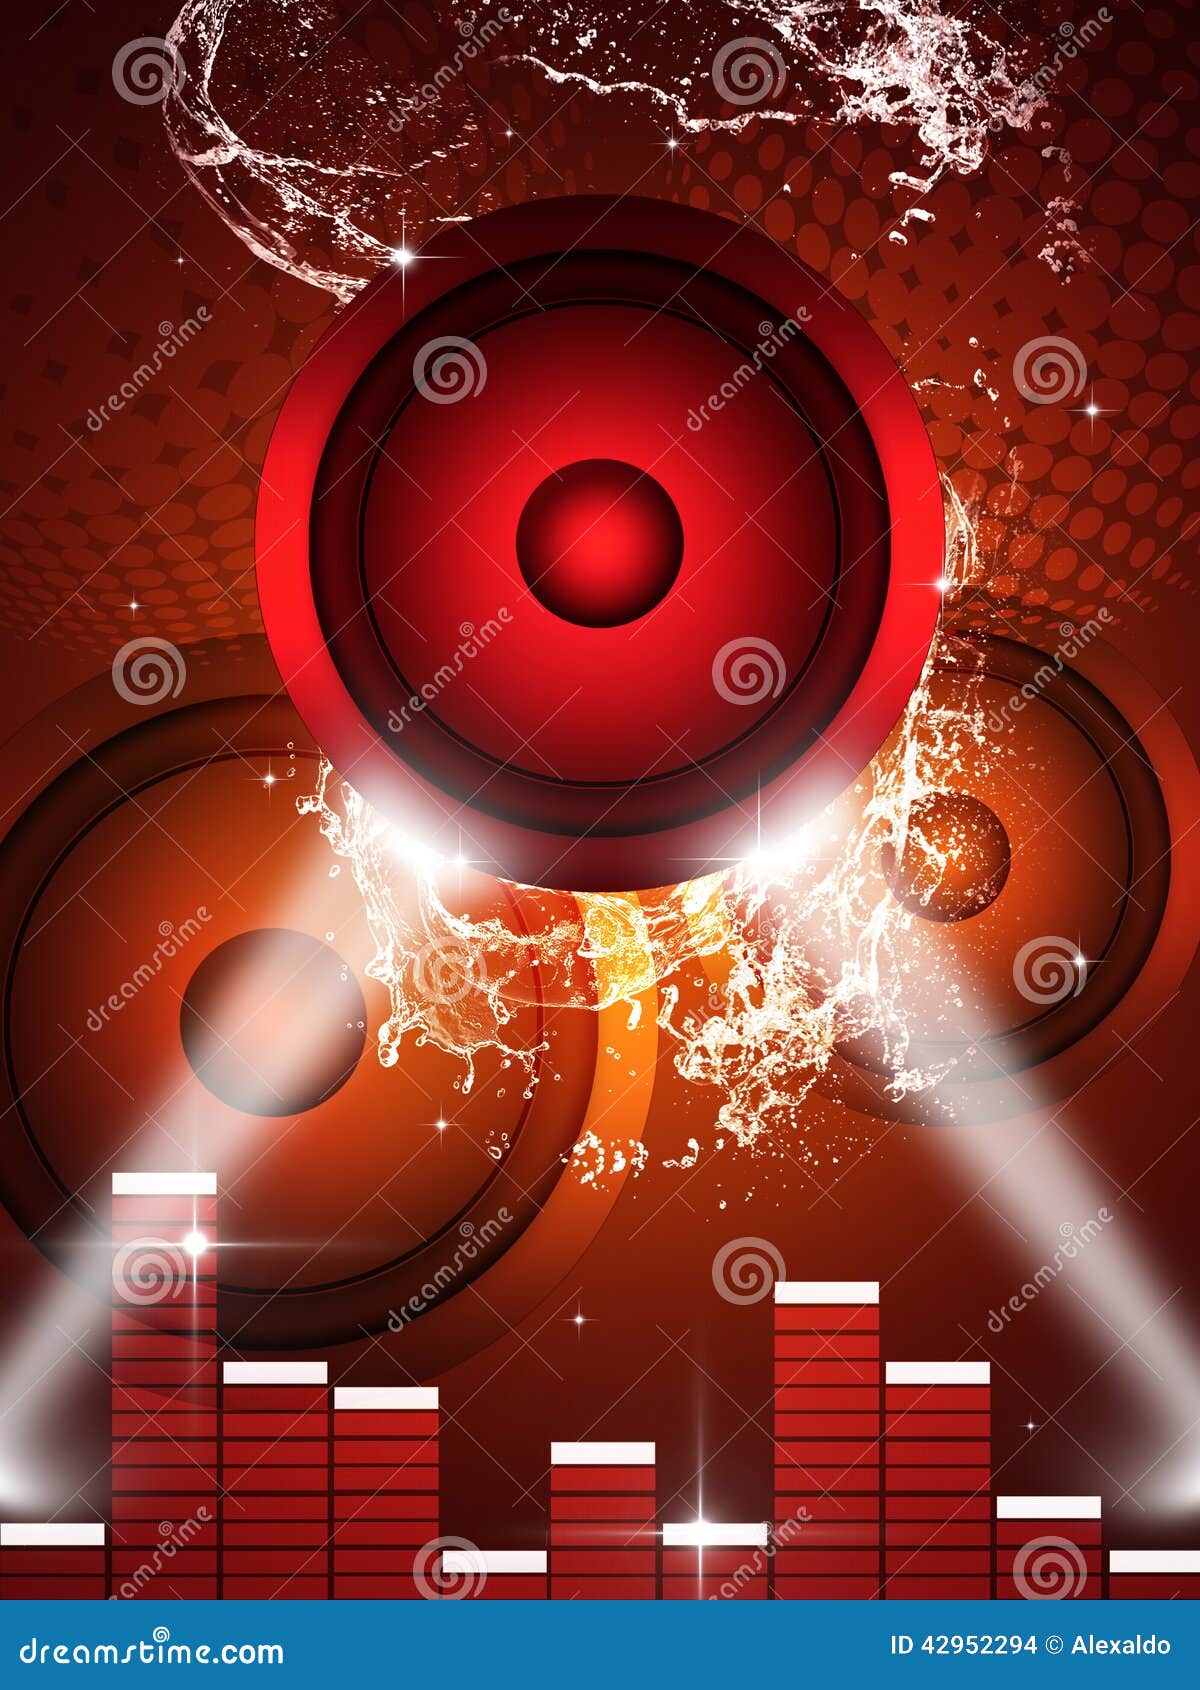 Music Party Background stock illustration. Illustration of speaker ...